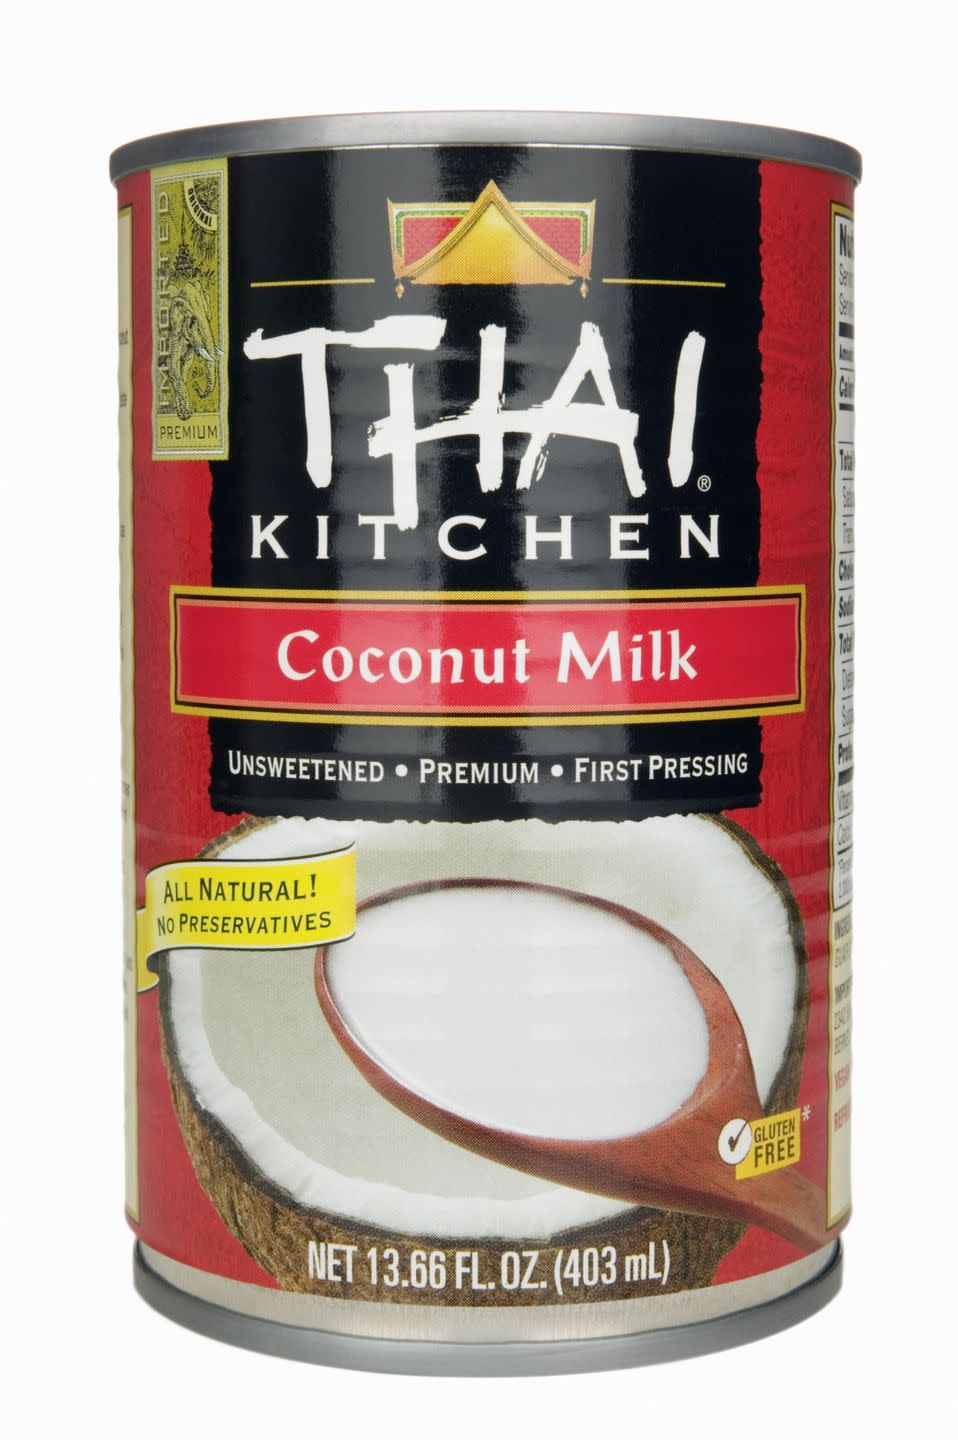 2) Coconut Milk